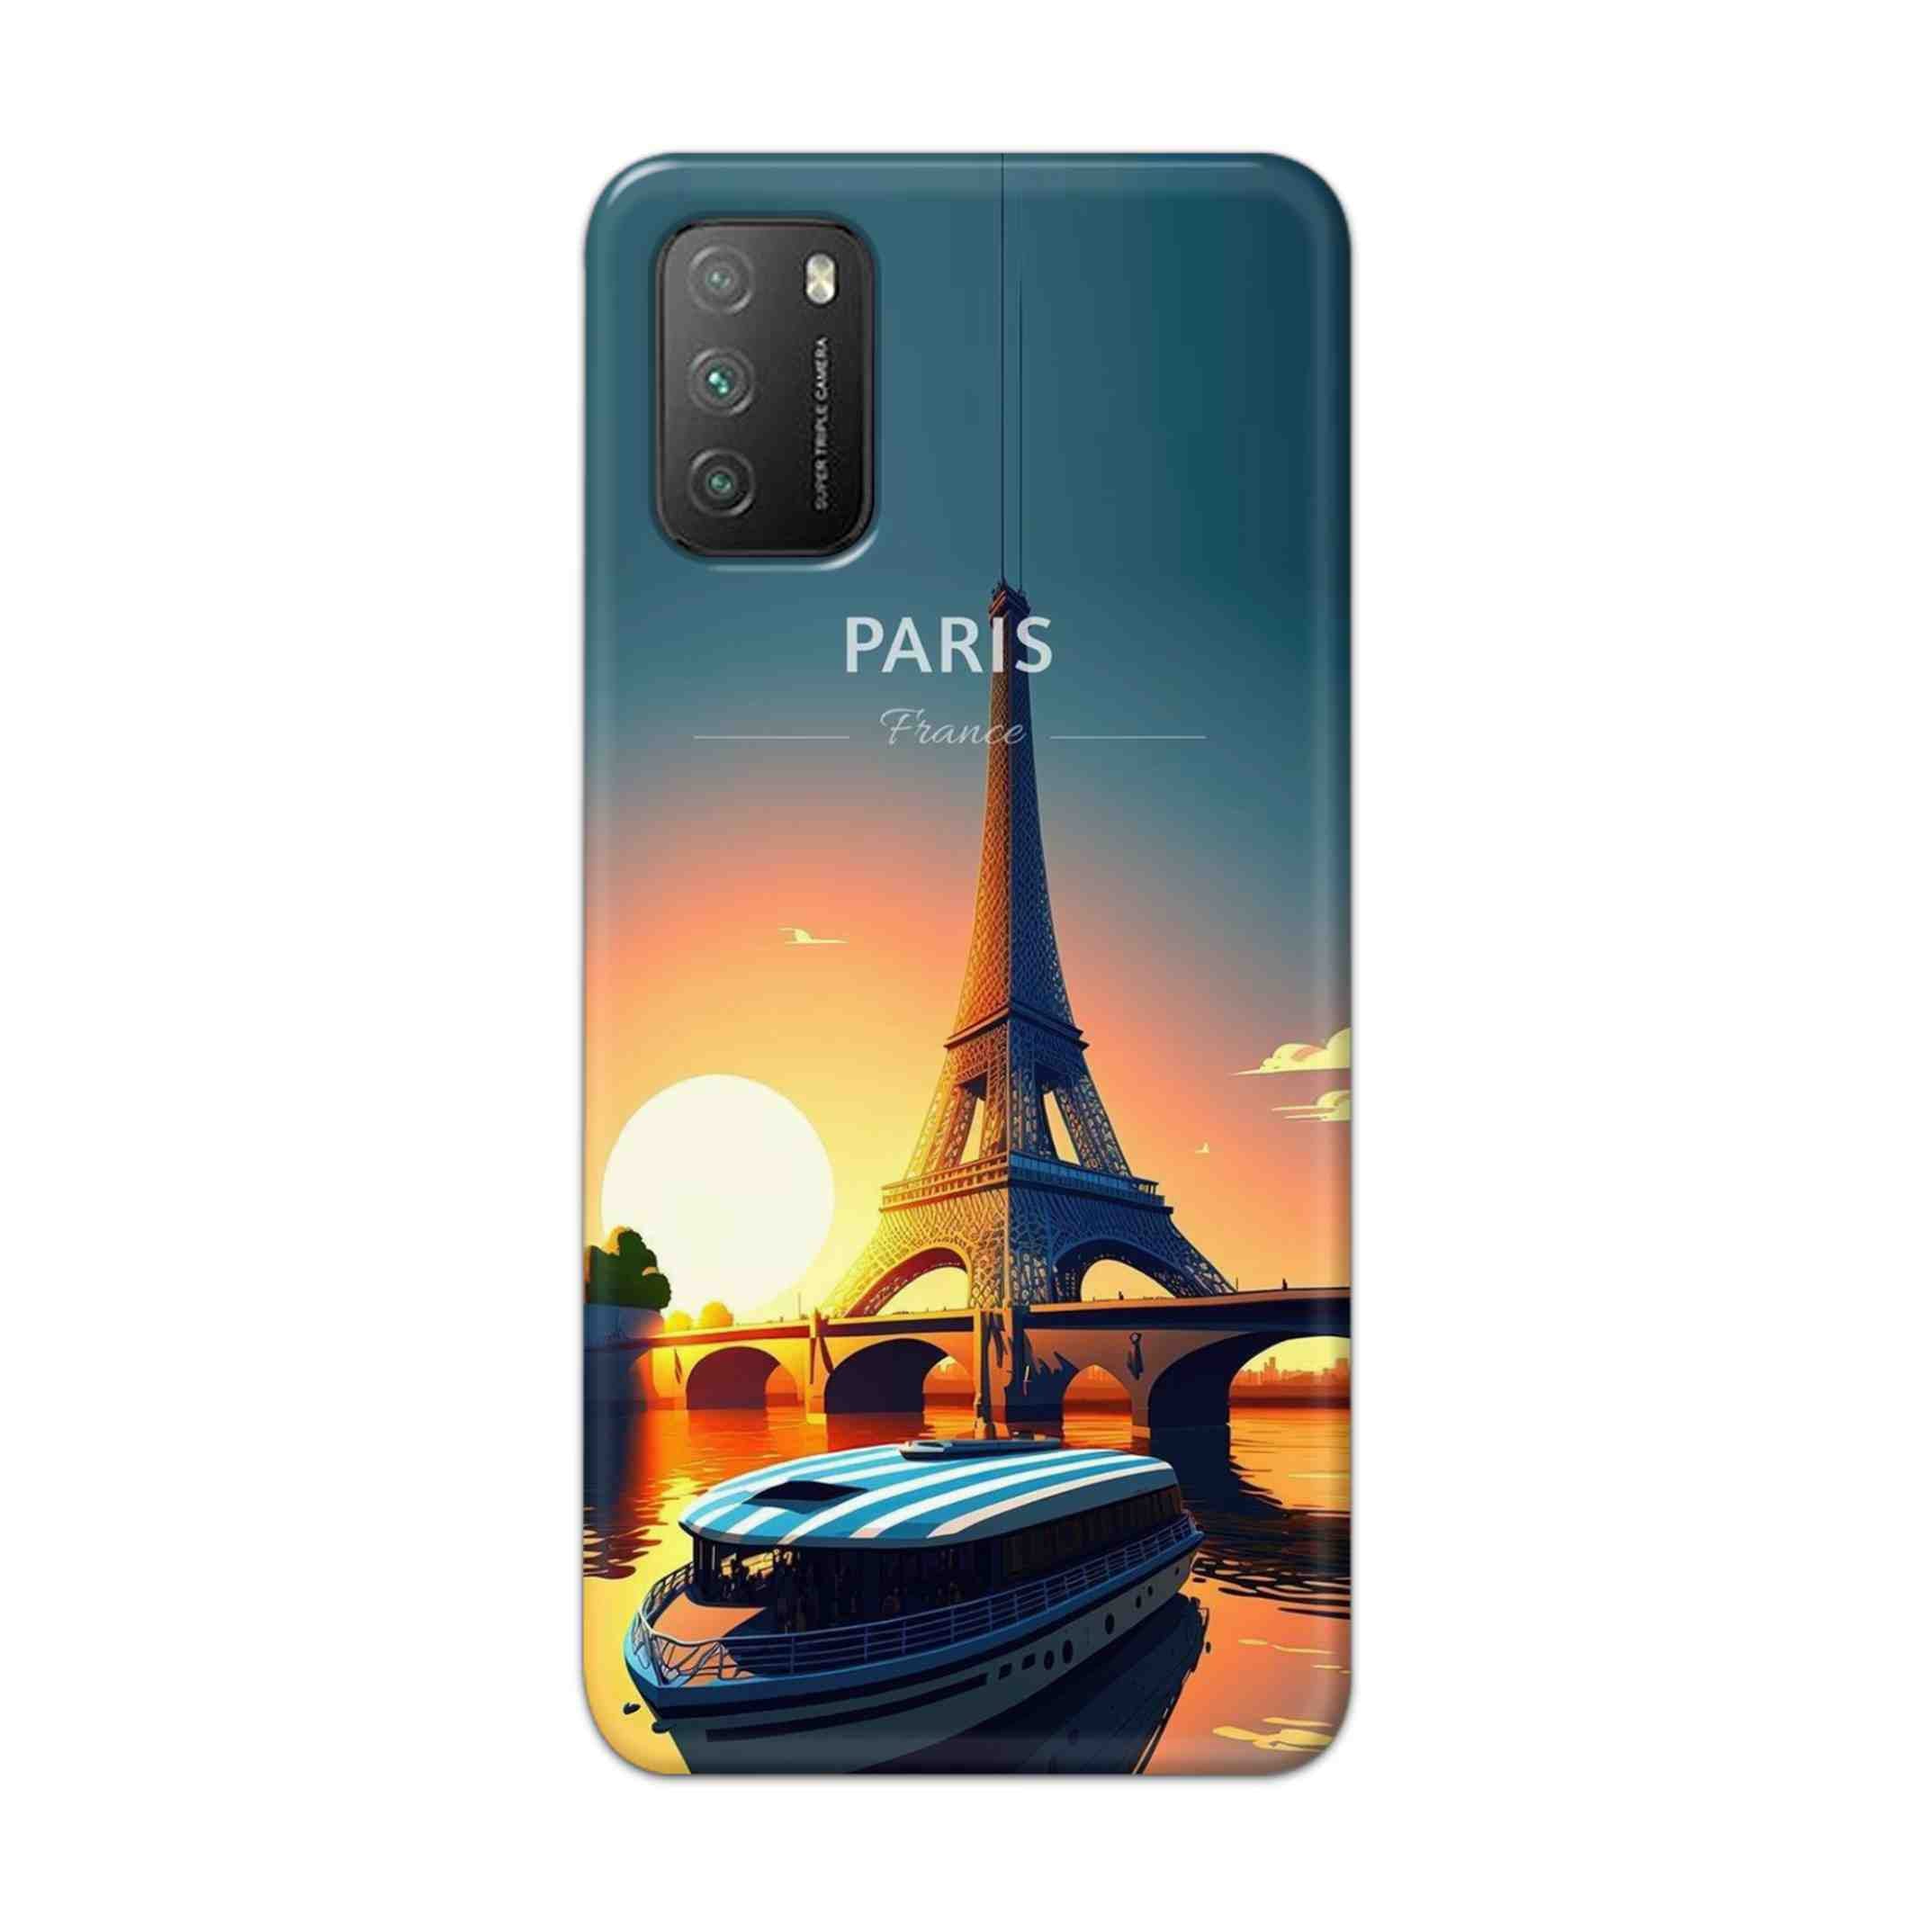 Buy France Hard Back Mobile Phone Case Cover For Poco M3 Online